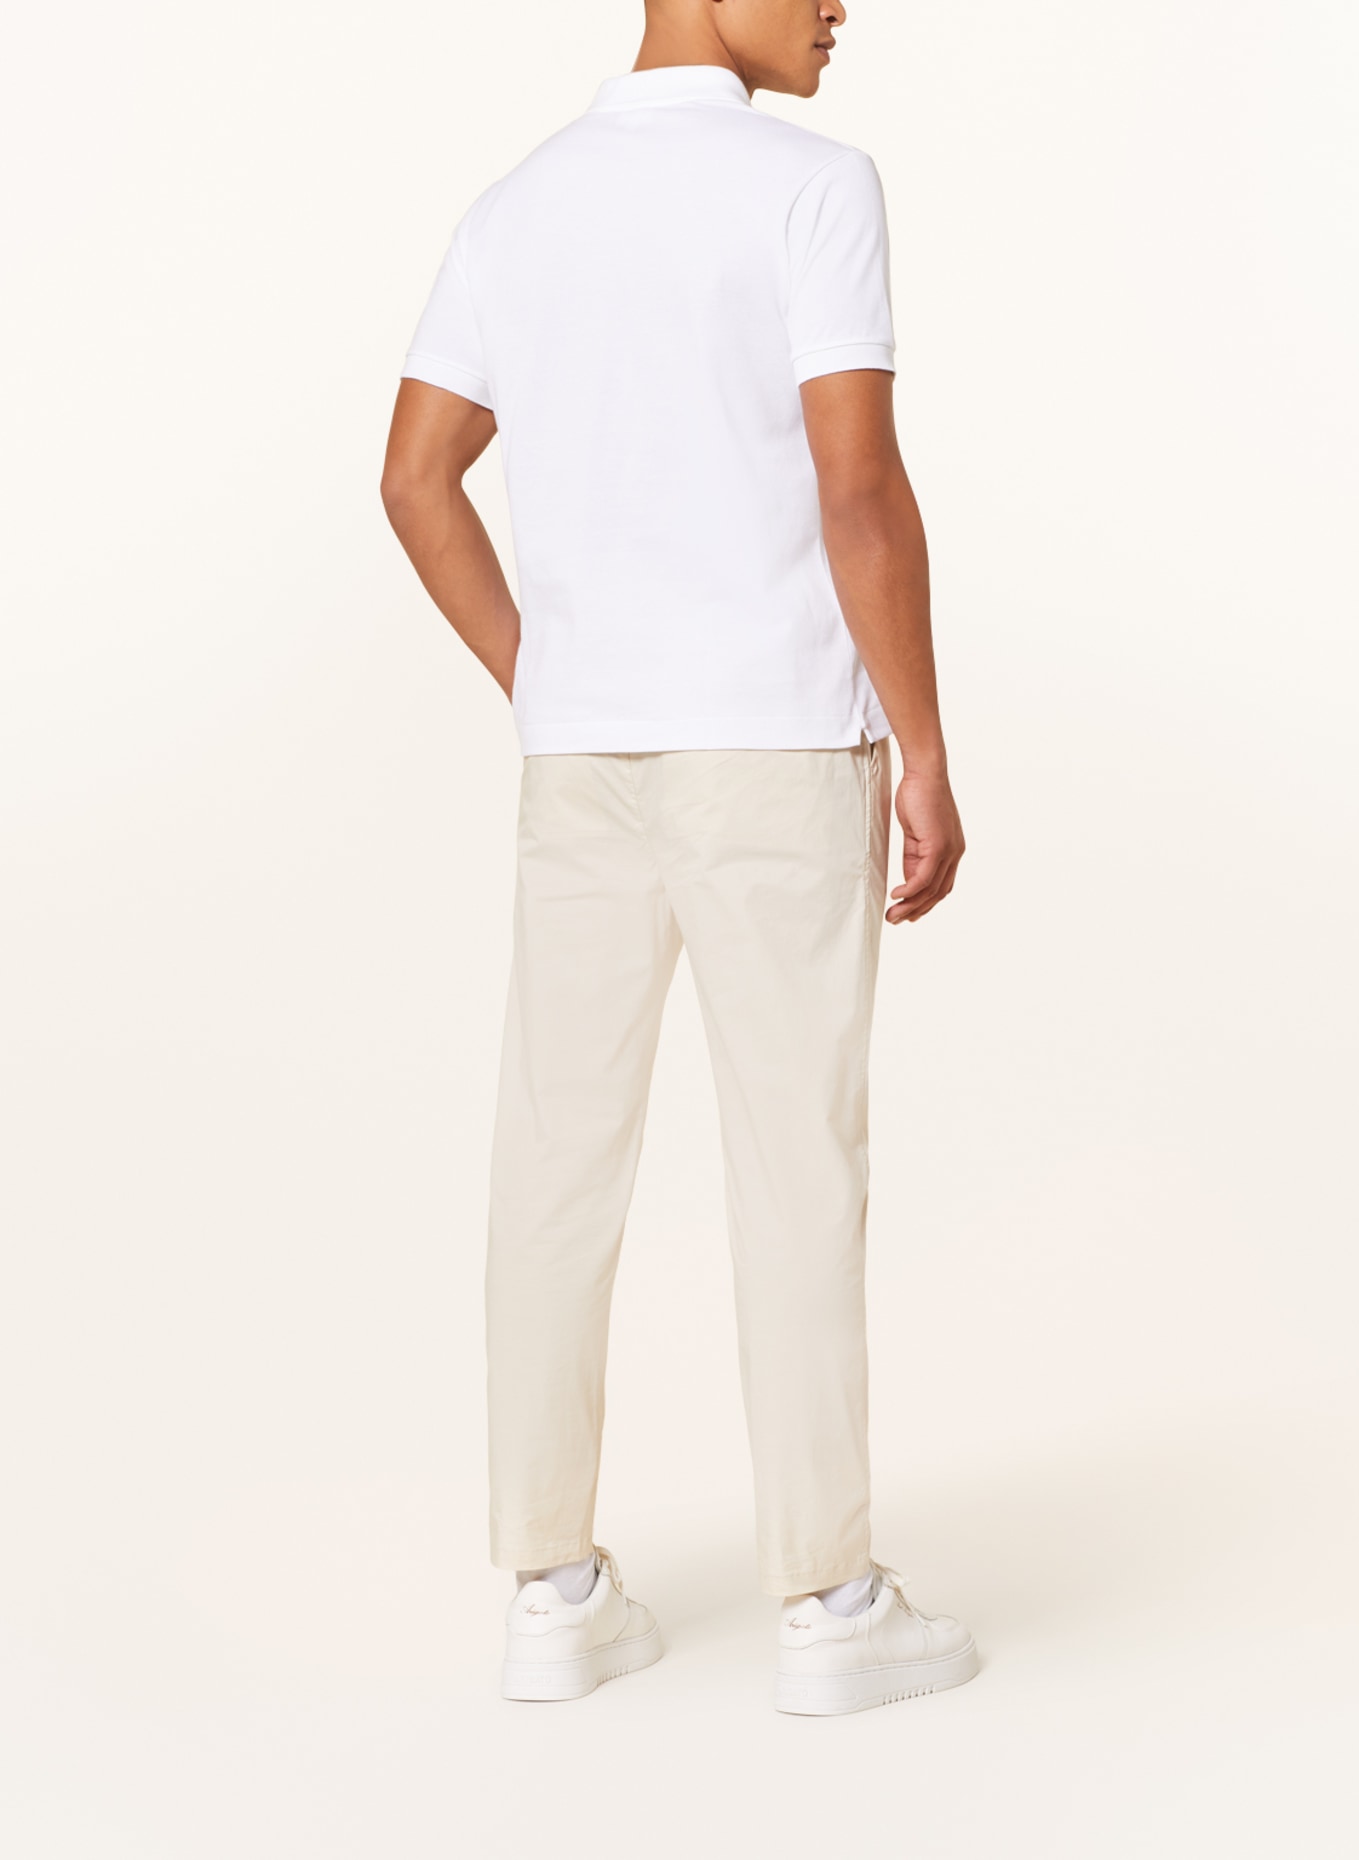 LACOSTE Piqué-Poloshirt Classic Fit, Farbe: WEISS (Bild 3)